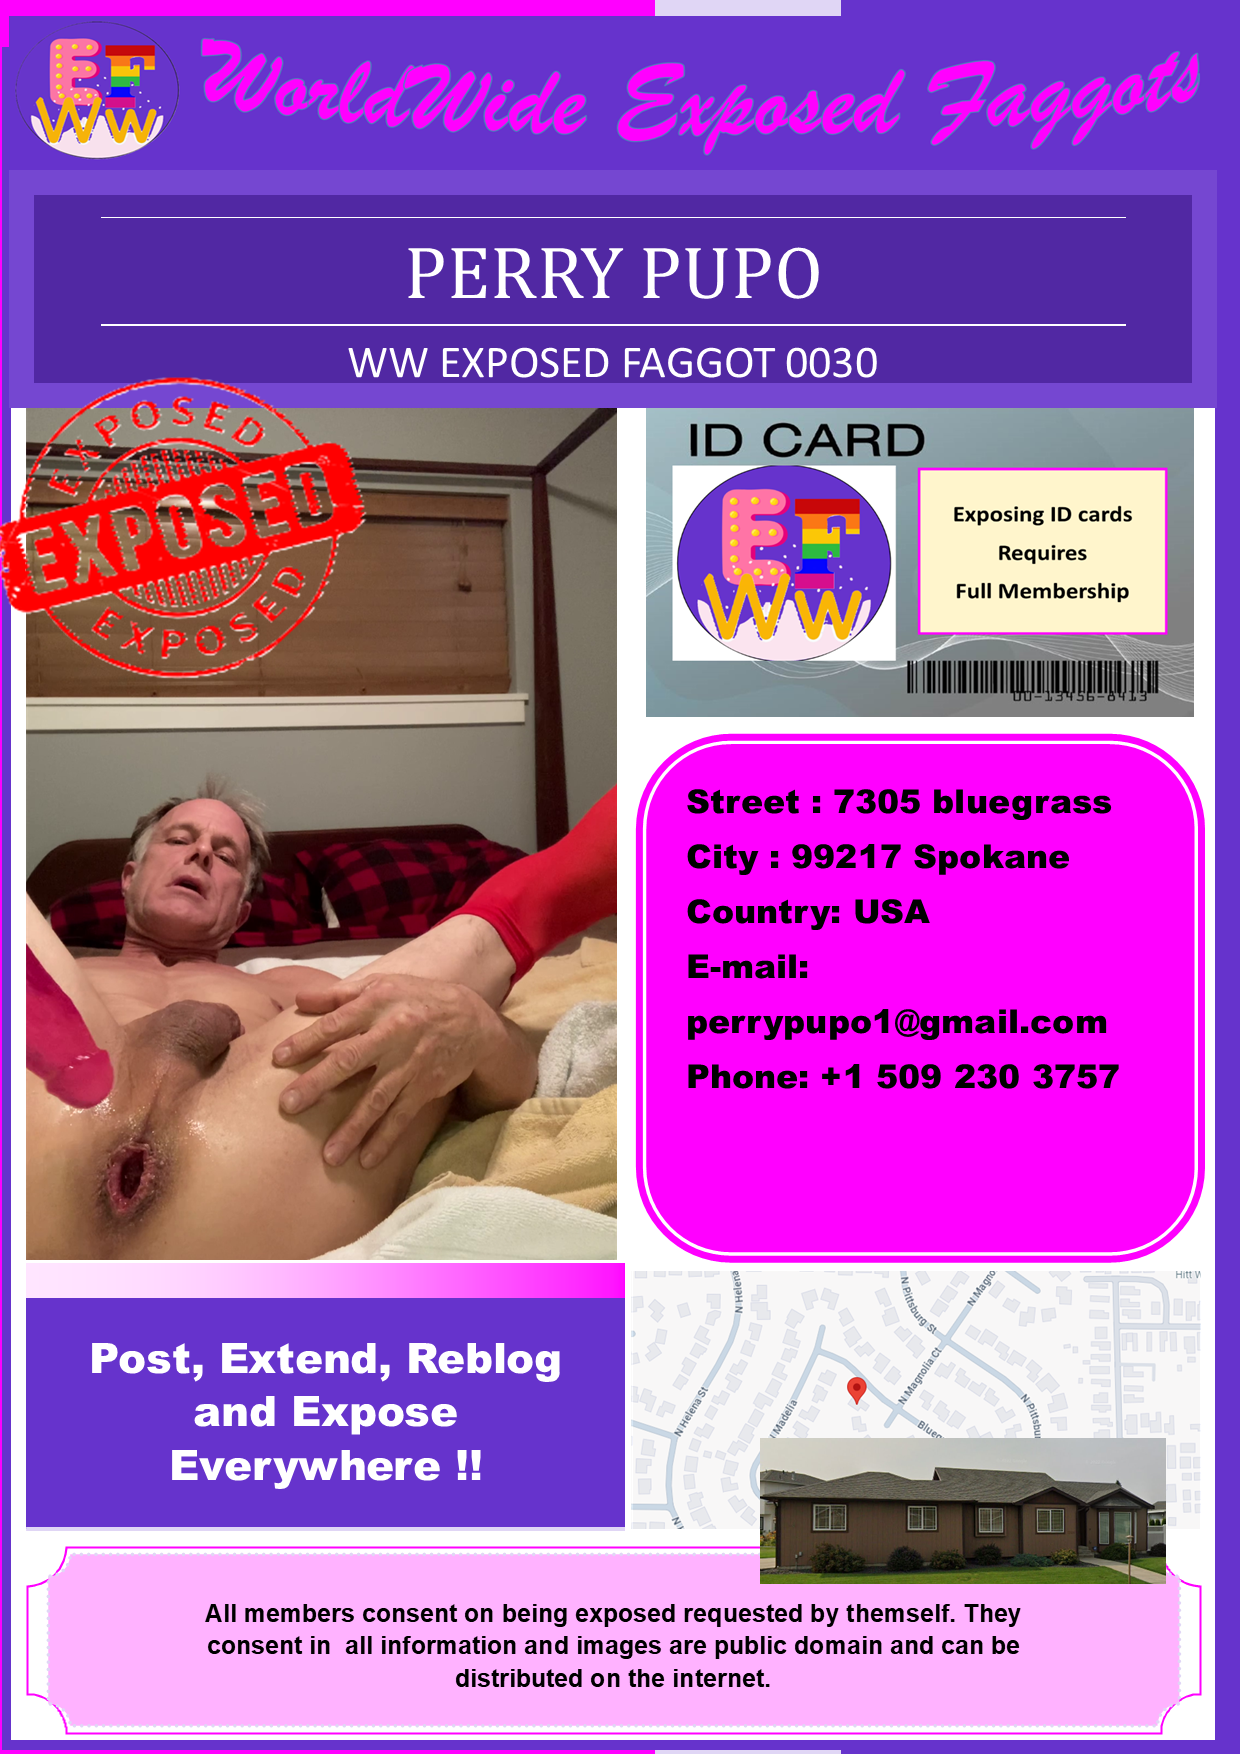 #30 Perry Pupo exposed faggot